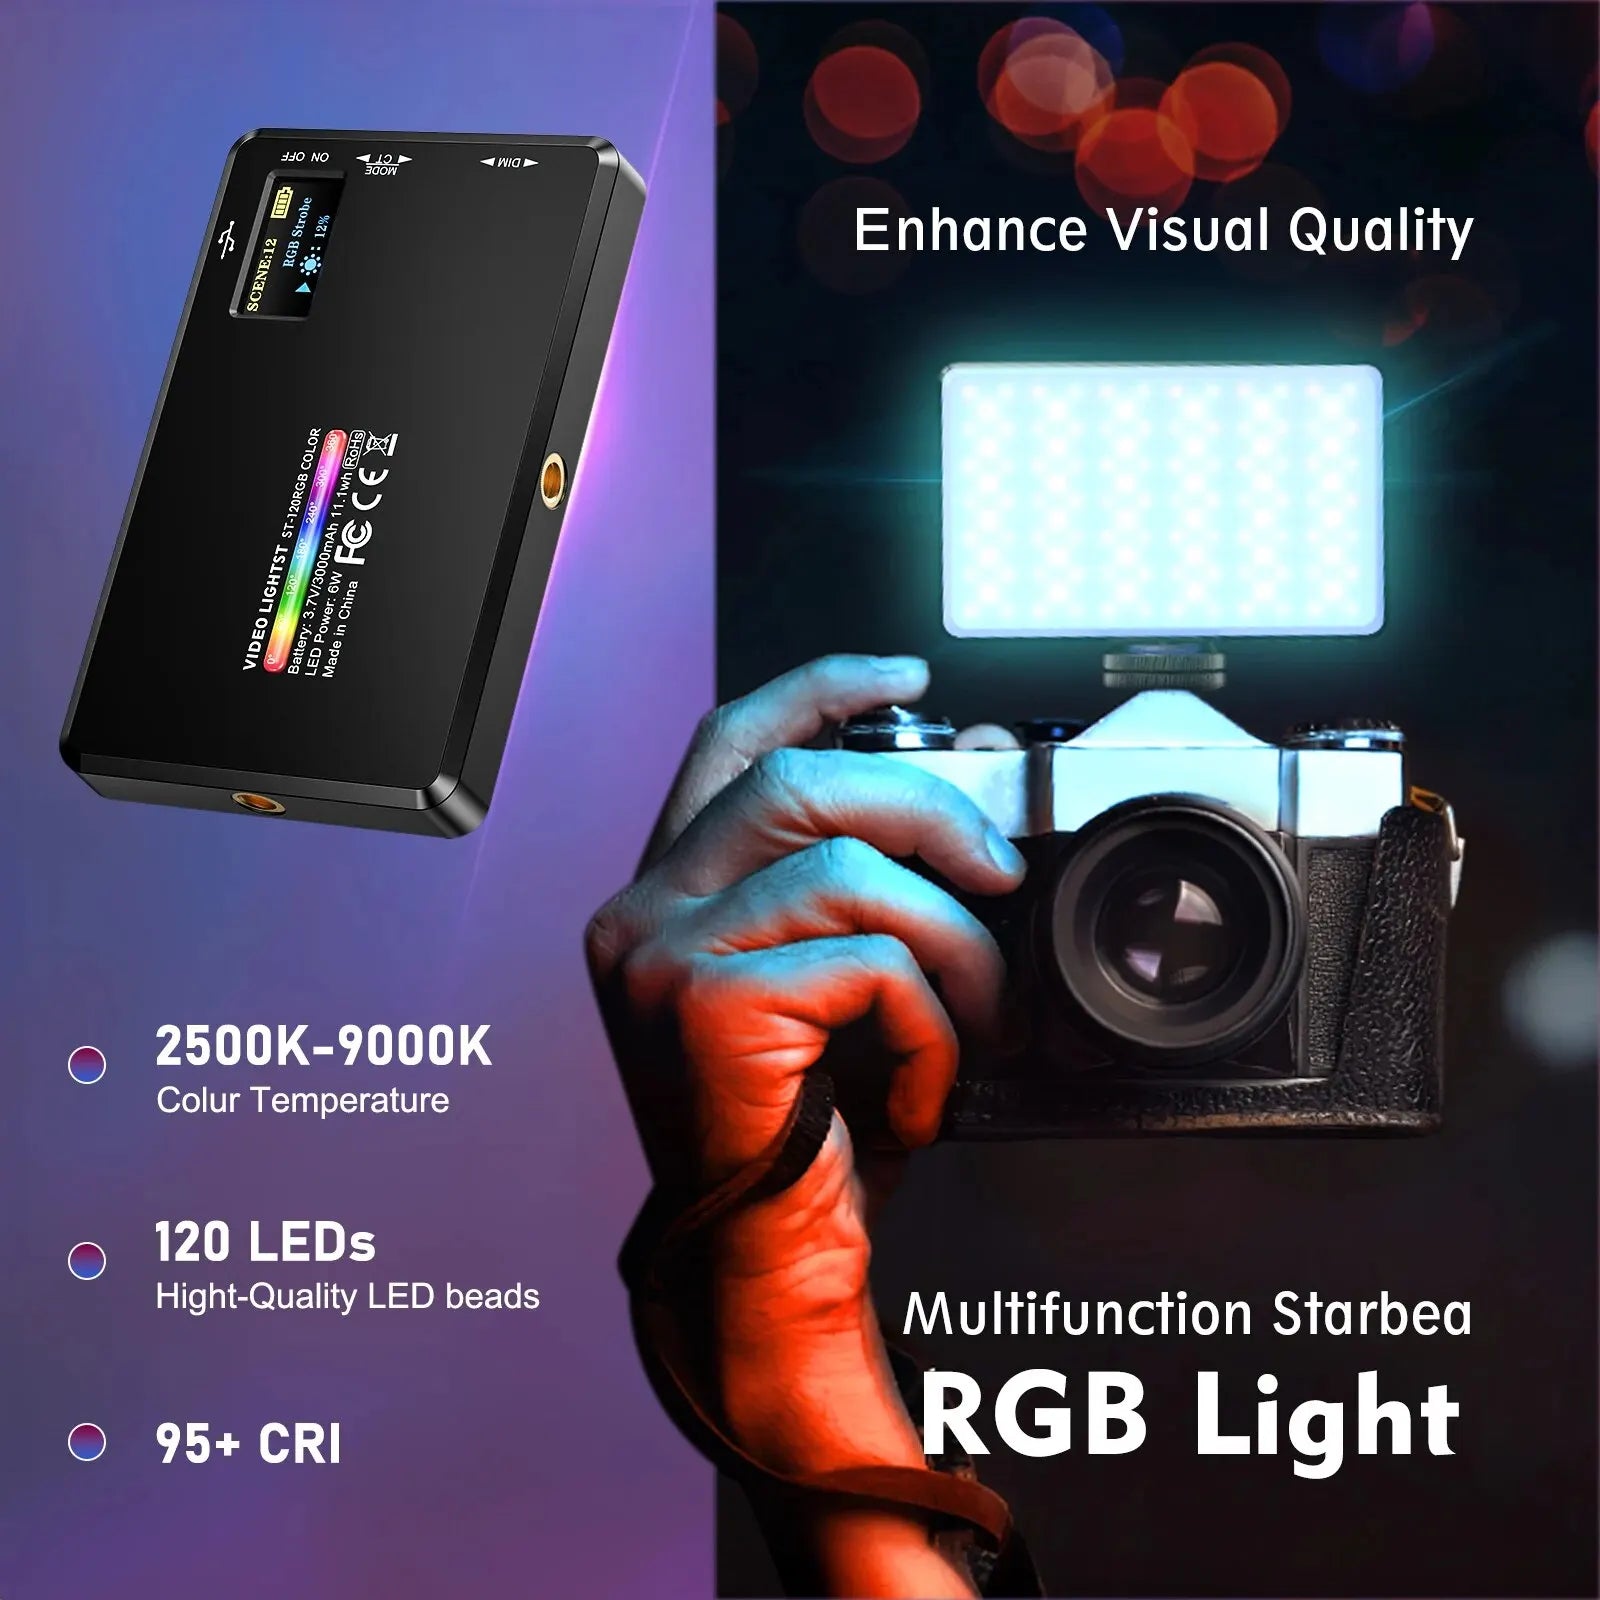 Versatile Video Lighting Kit for Multi-Device Creators